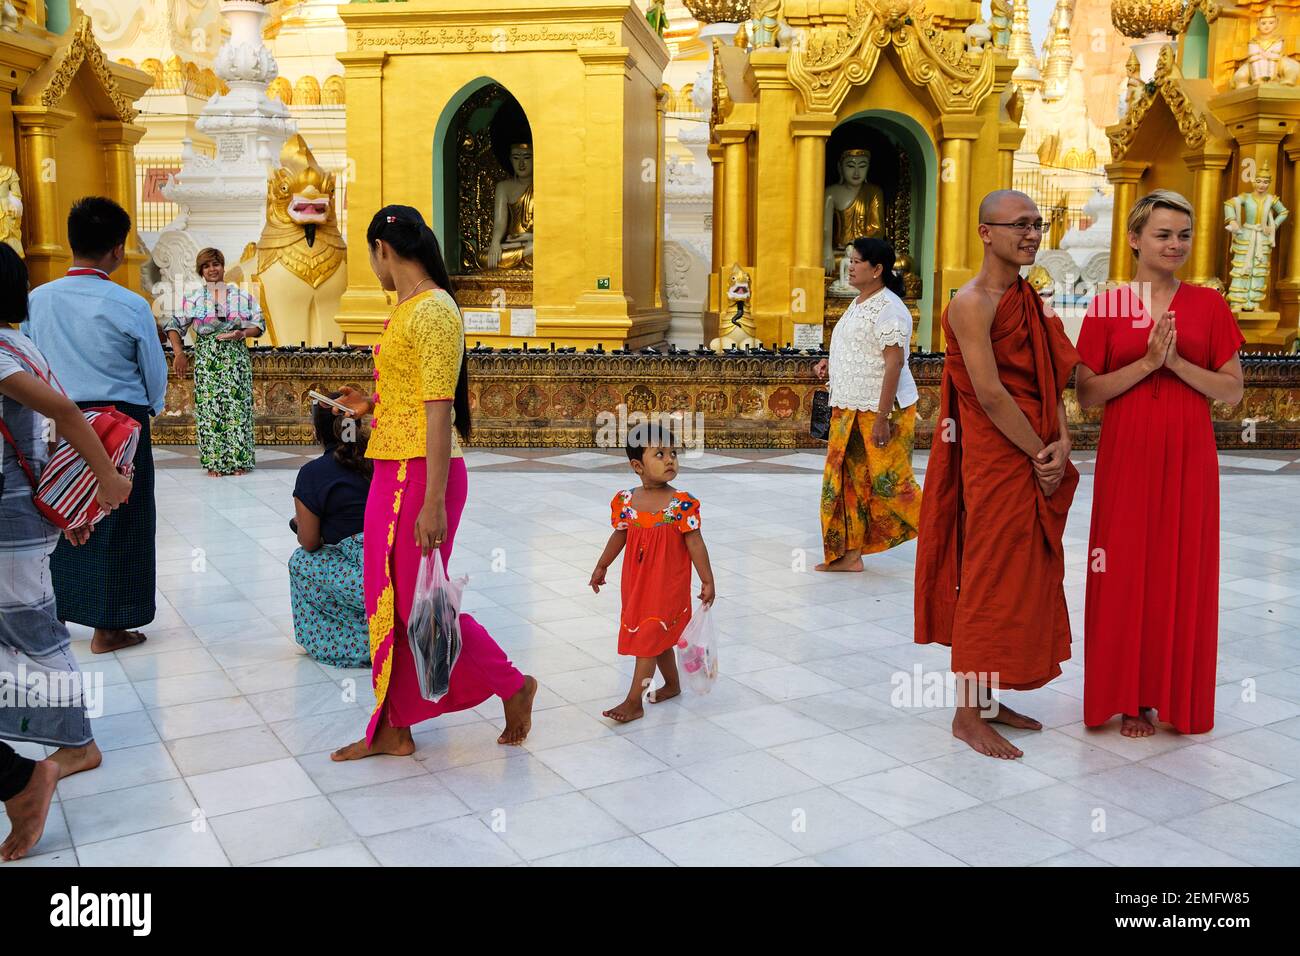 Besucher und Touristen im Shwedagon Pagoda Tempel Komplex in Yangon, Myanmar. Stockfoto